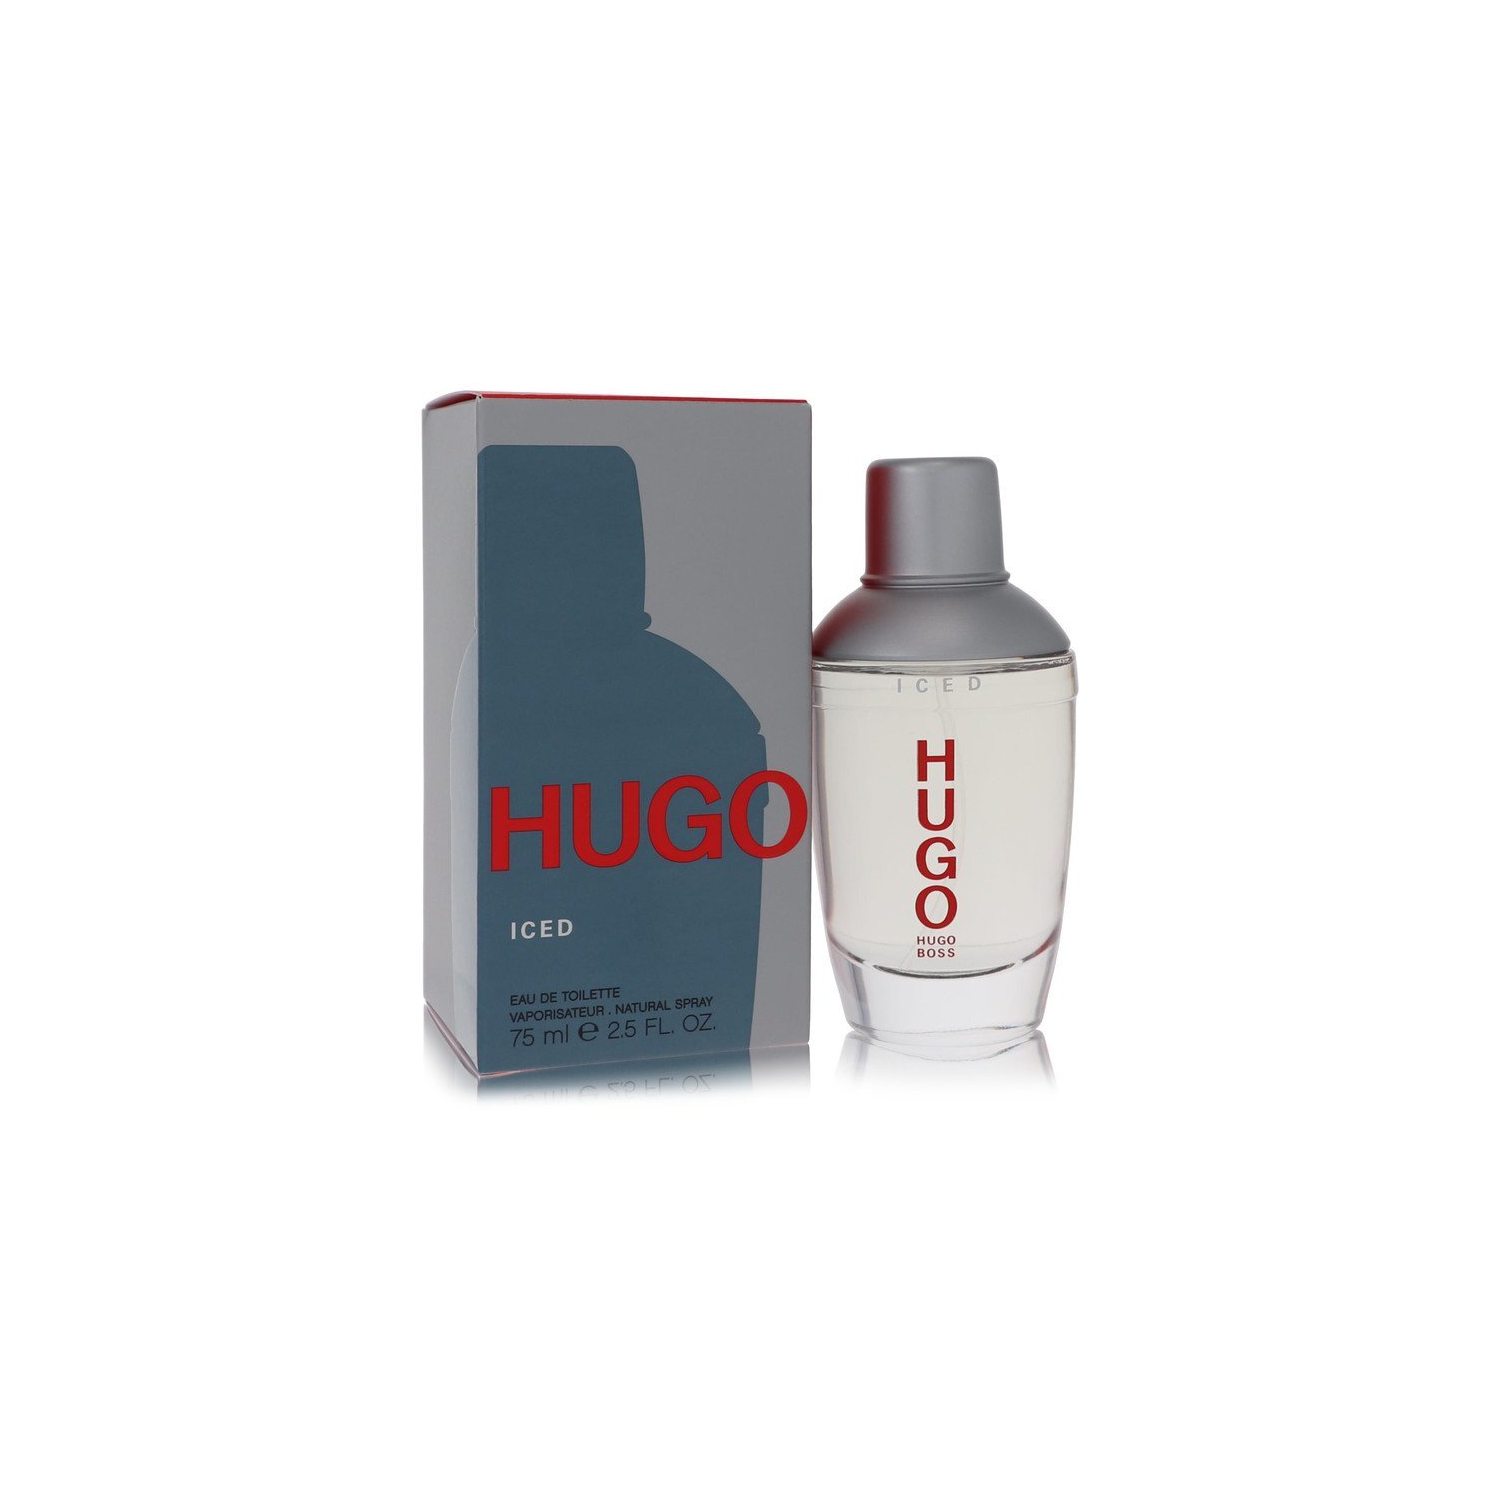 Hugo Iced by Hugo Boss Eau De Toilette Spray 2.5 oz (Men)